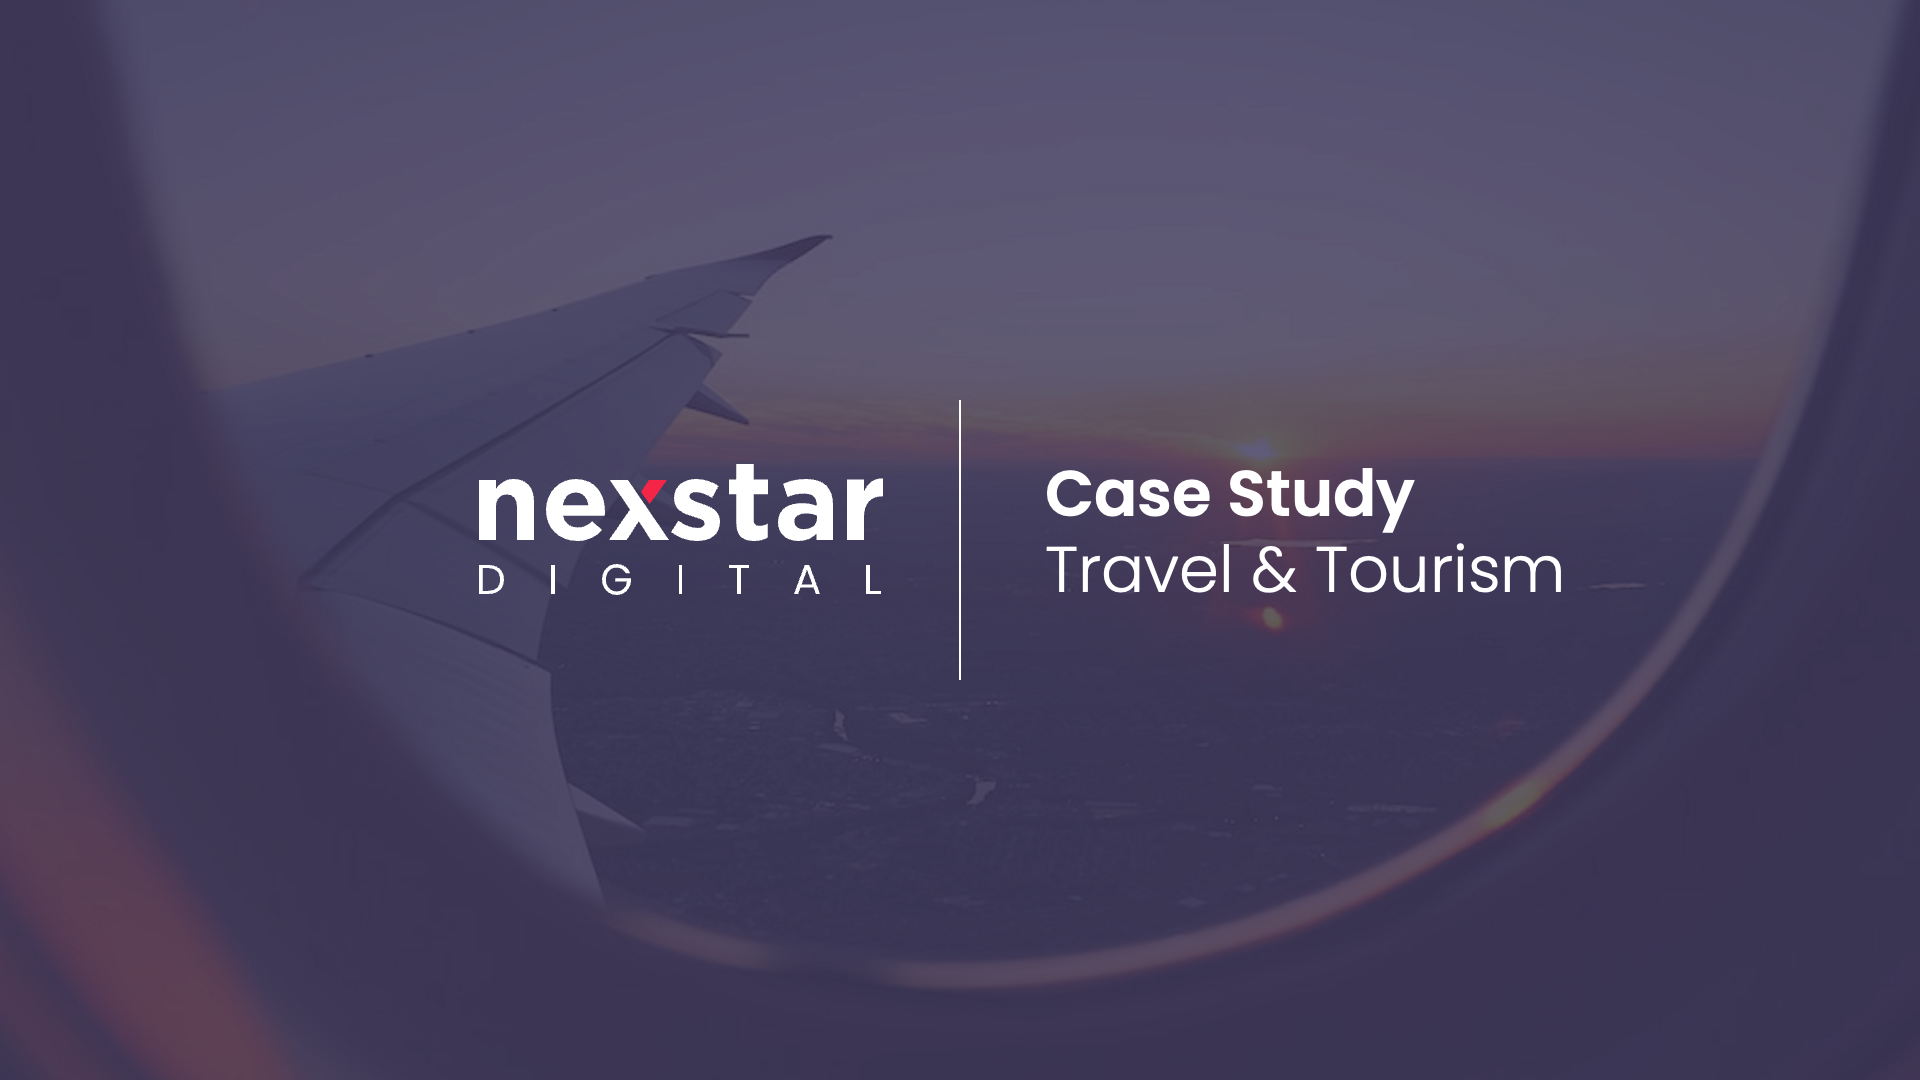 CASE STUDY: Travel & Tourism Advertiser